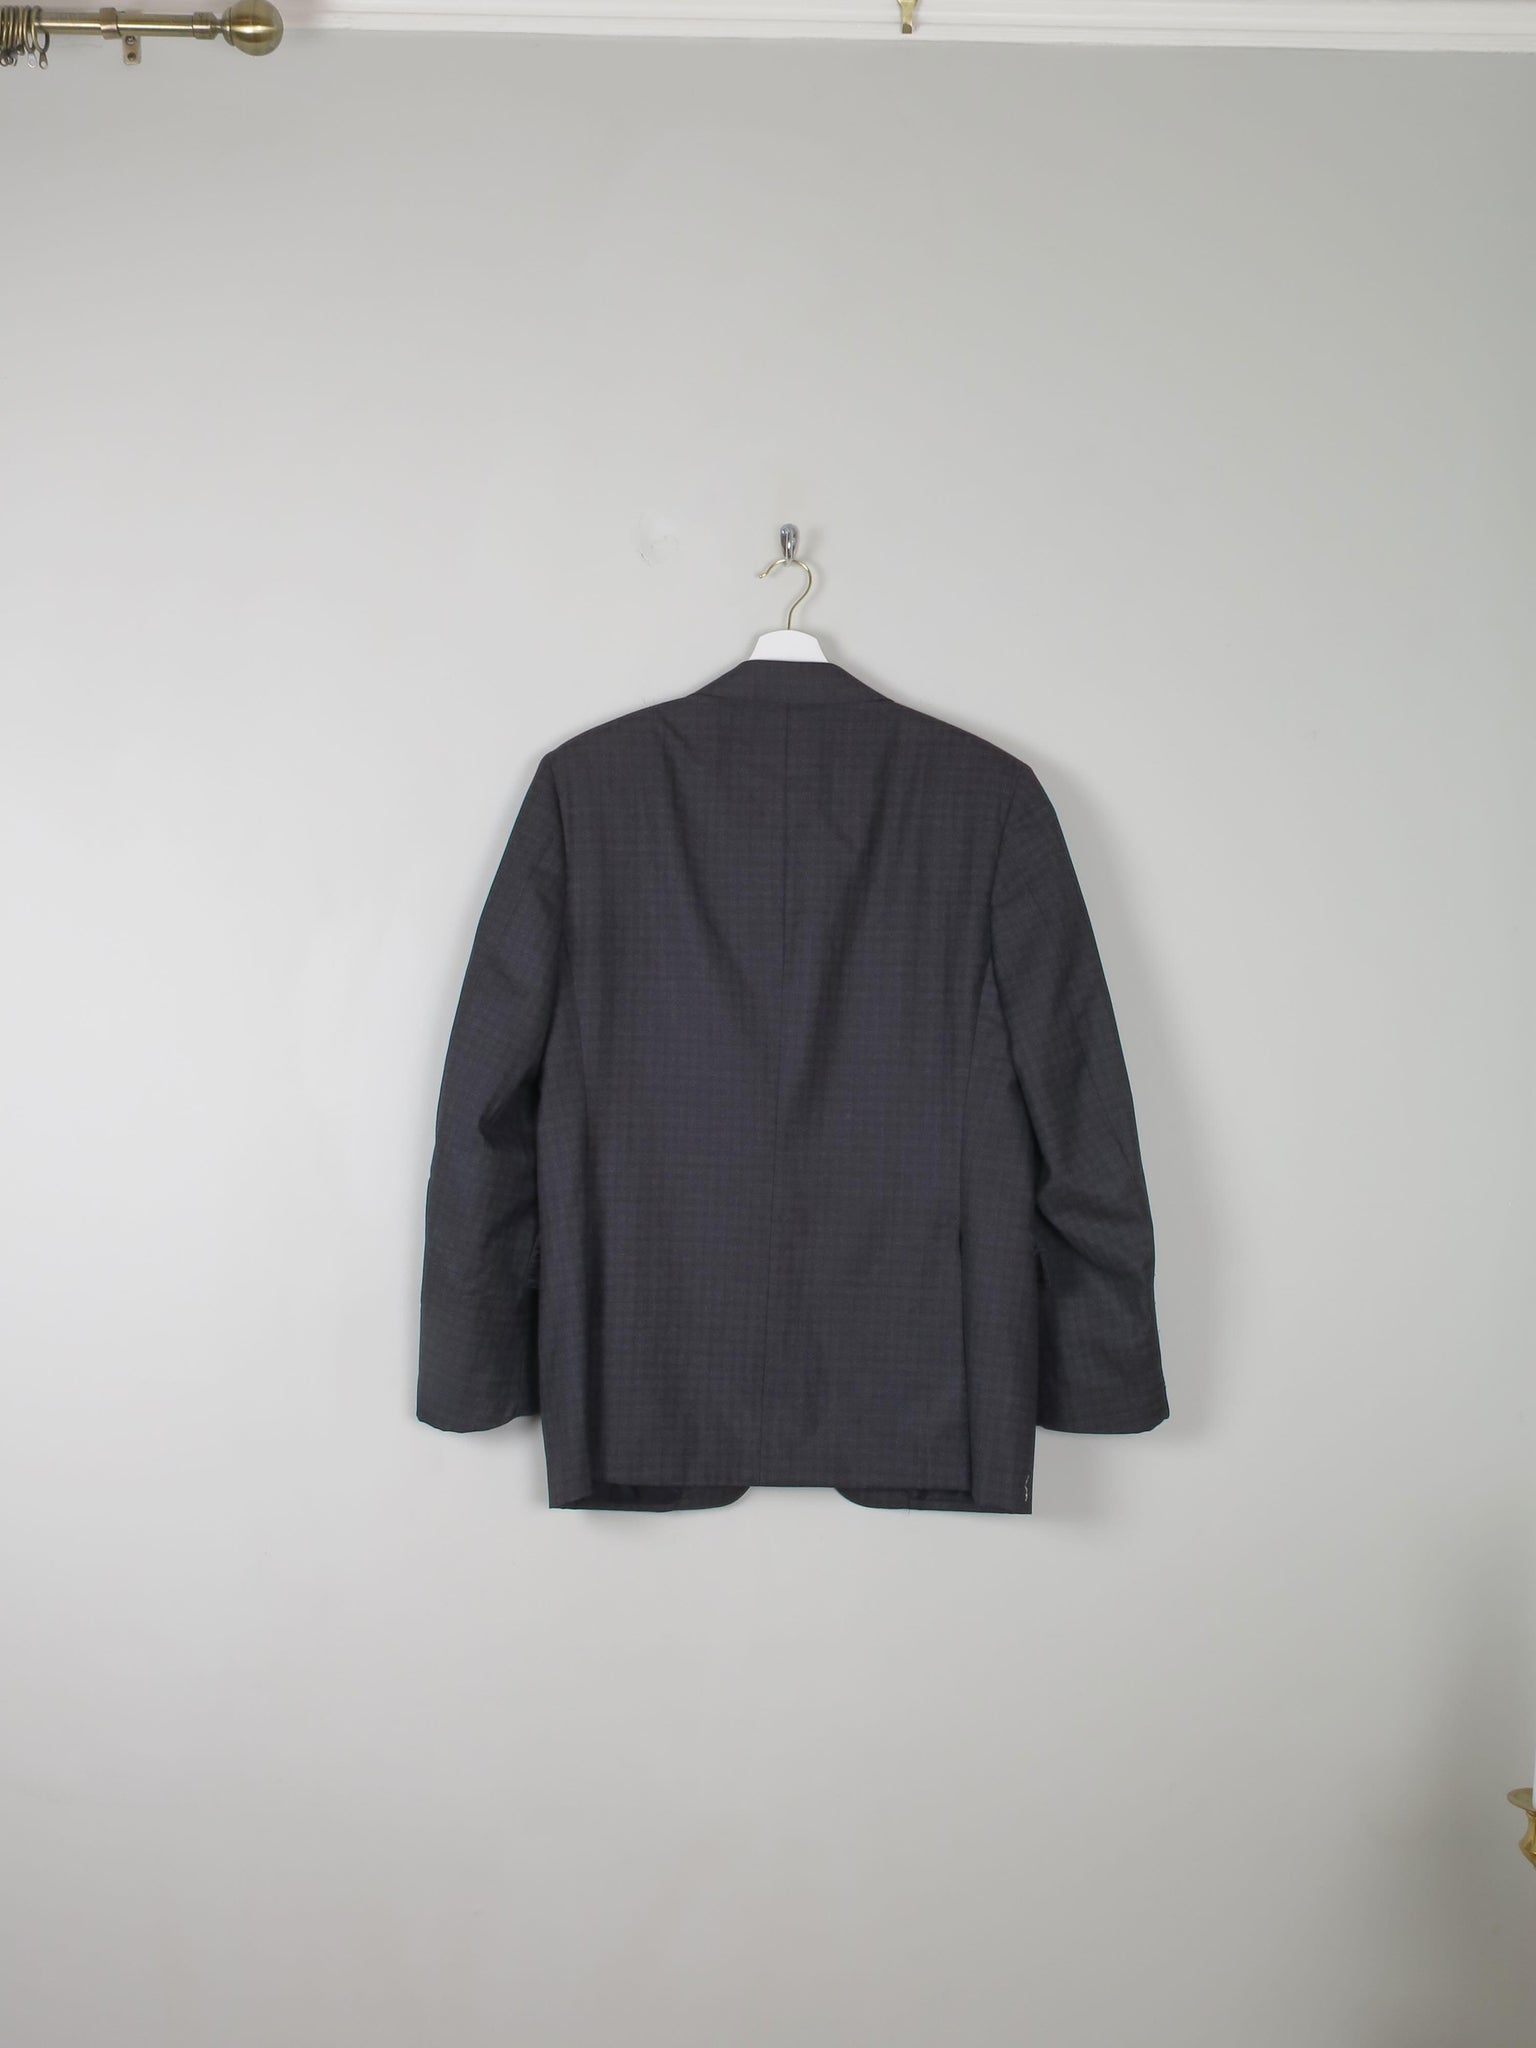 Men's Vintage Grey & Black Check Jacket By Canali 38 R - The Harlequin